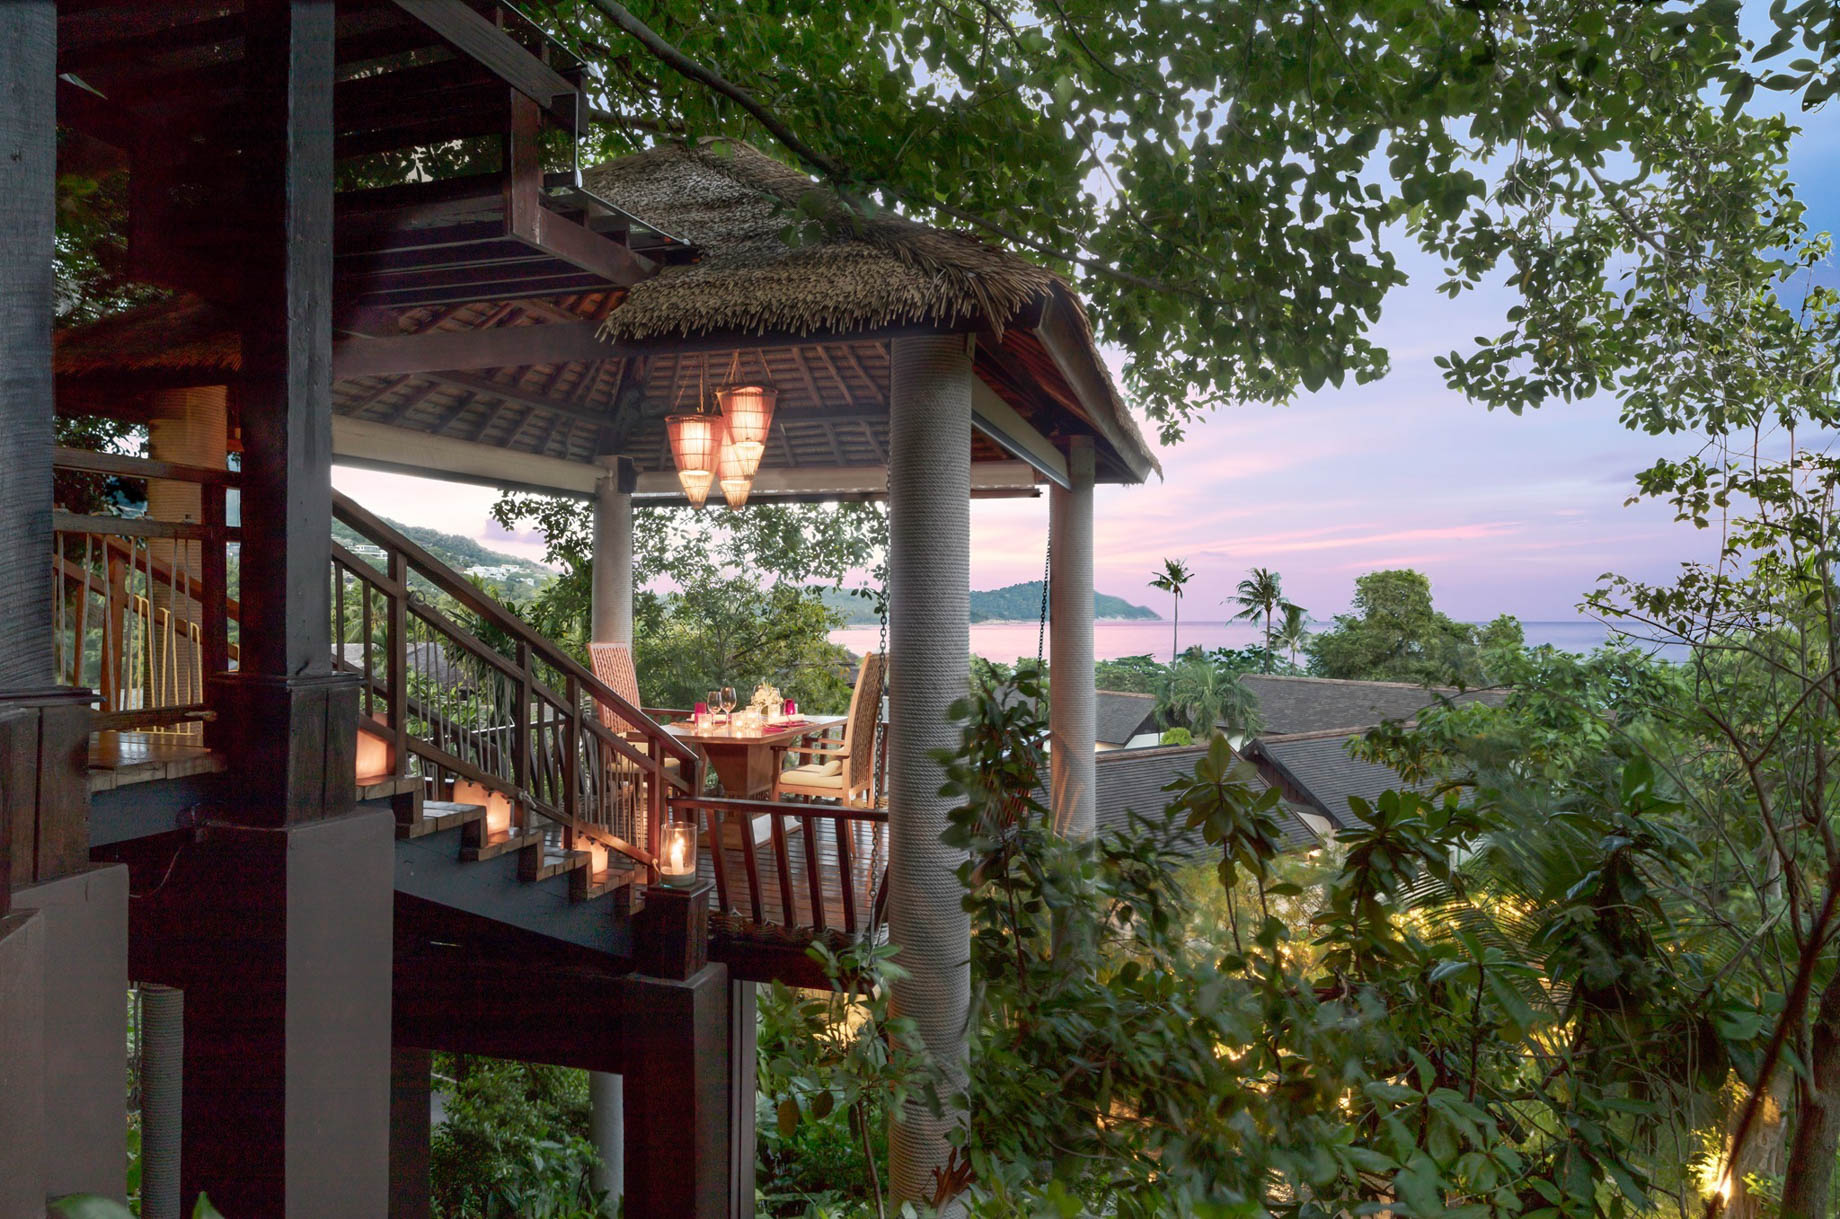 Anantara Lawana Koh Samui Resort – Thailand – Tree Tops Signature Restaurant